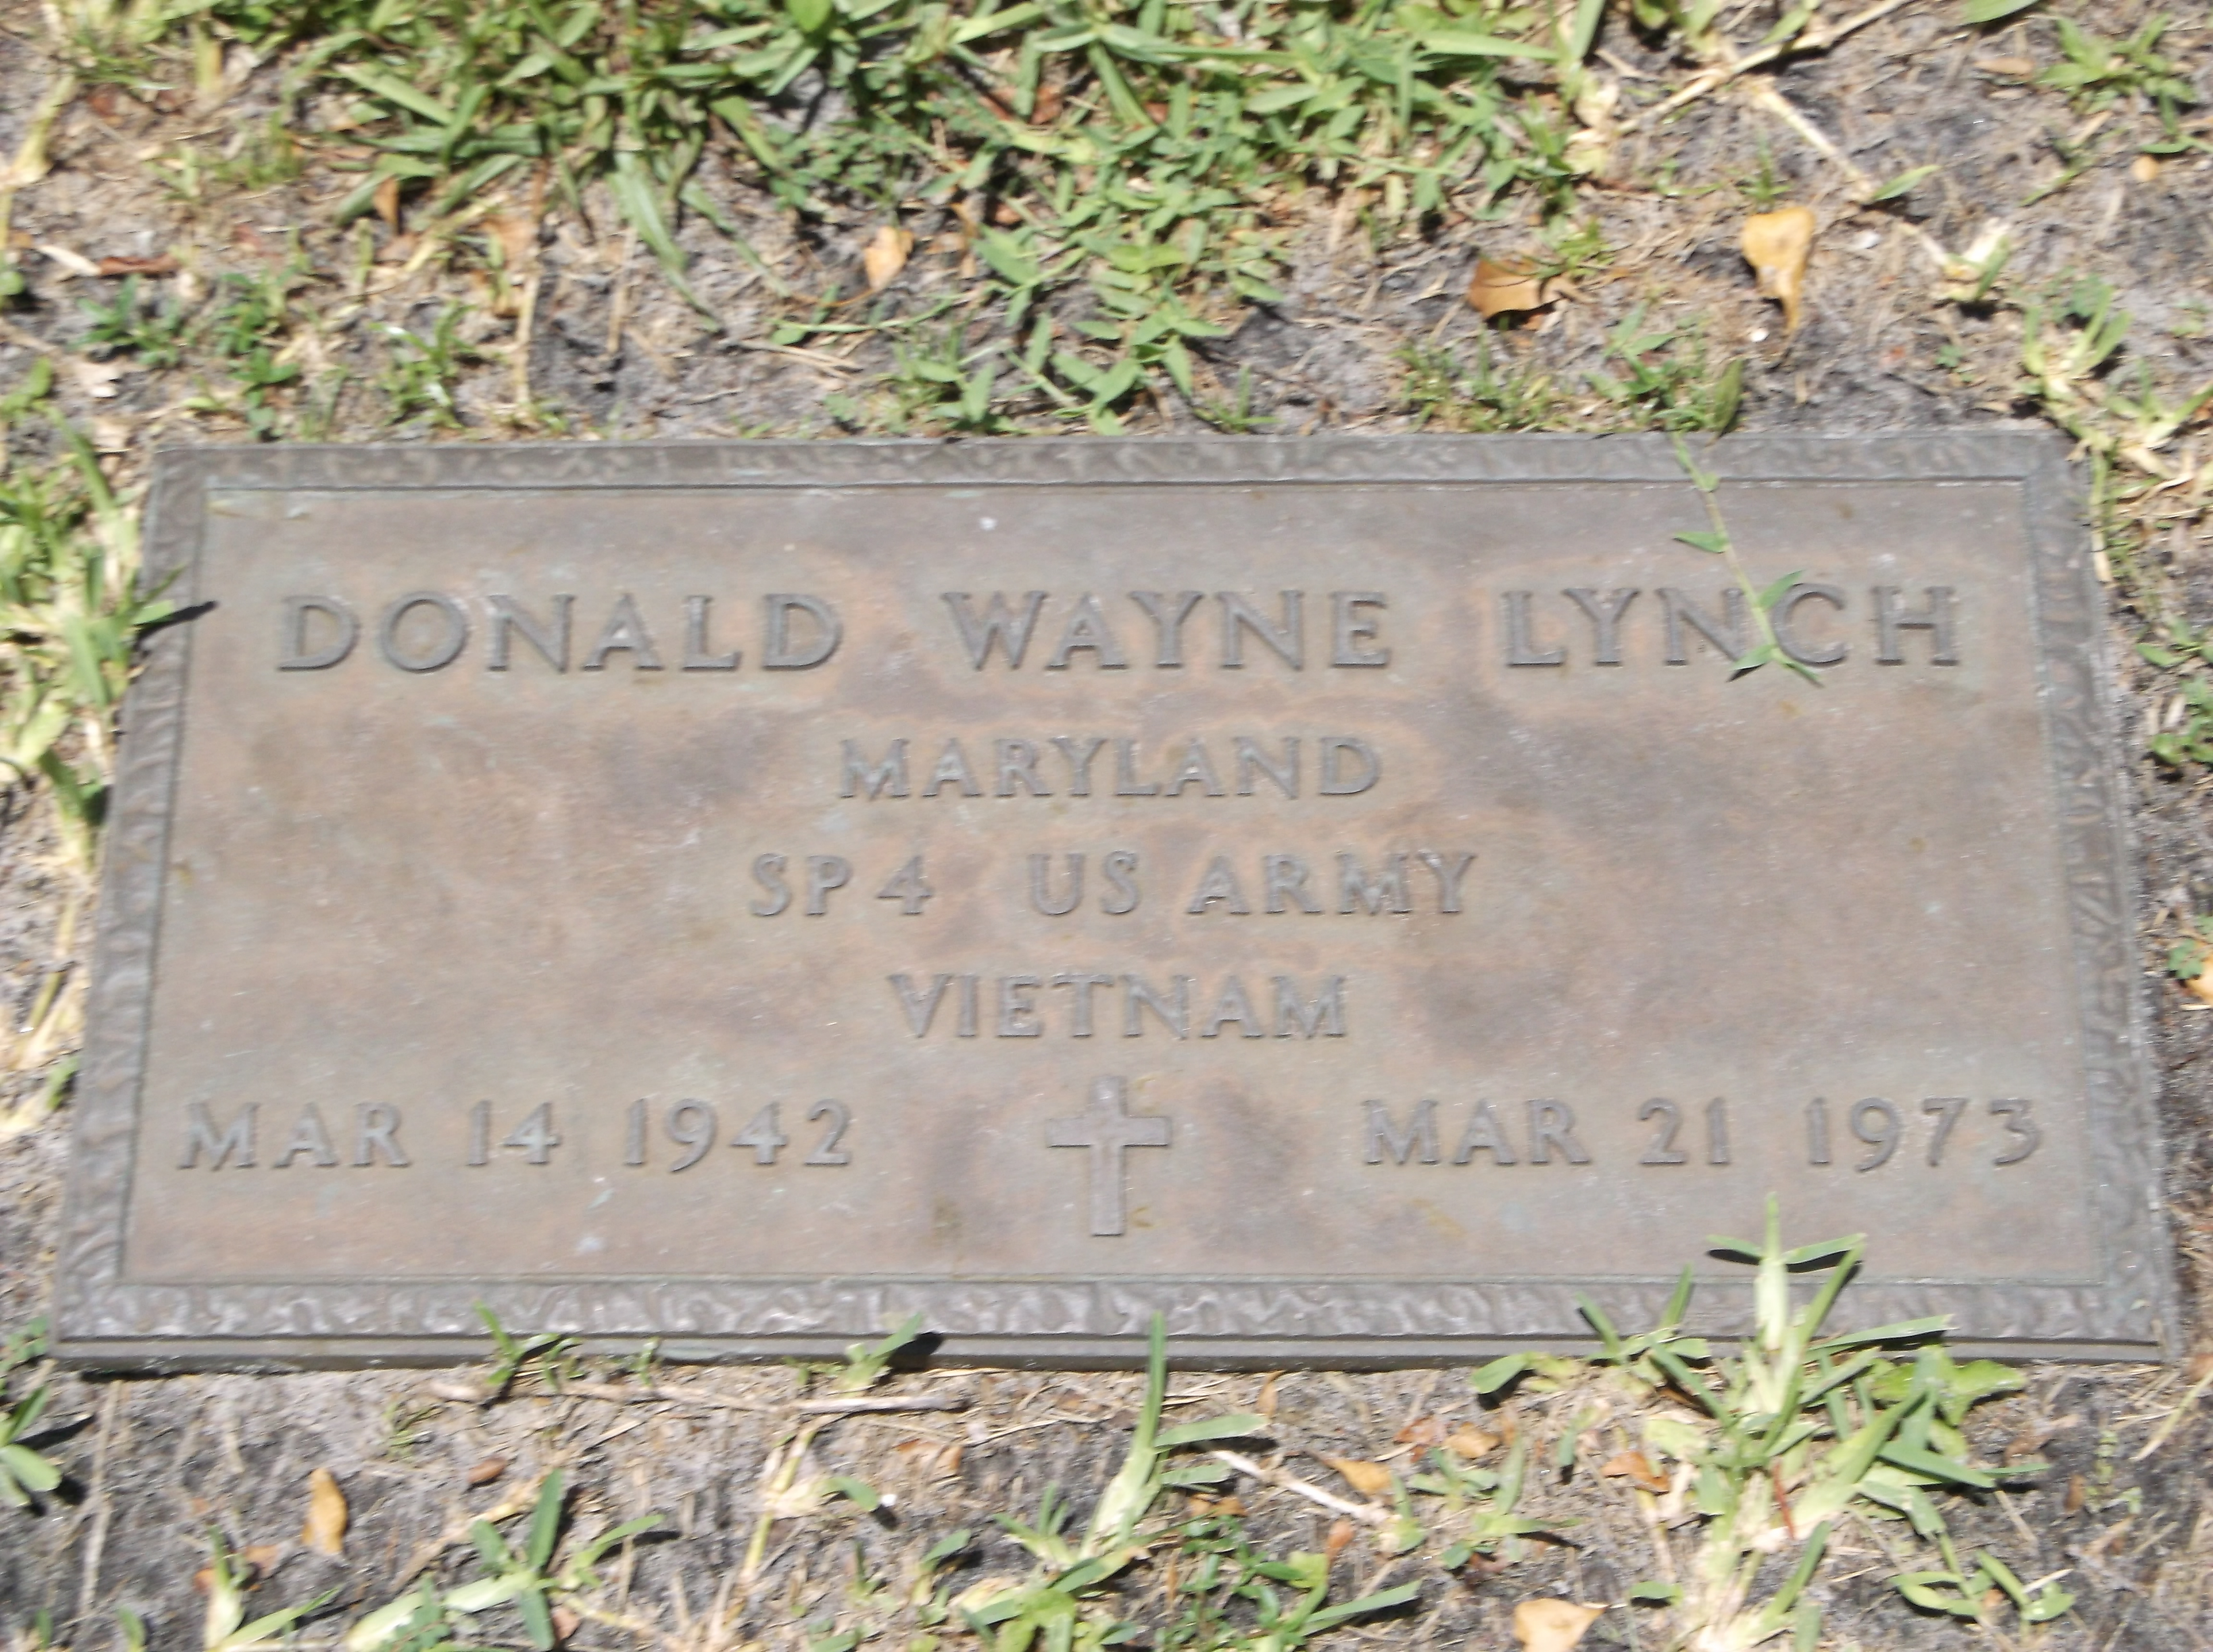 Donald Wayne Lynch